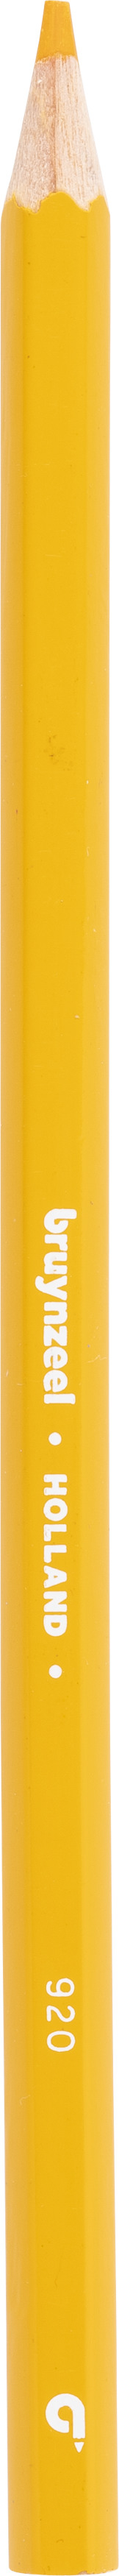 BRUYNZEEL Schulfarbstift Super 3.3mm 60516920 dunkelgelb